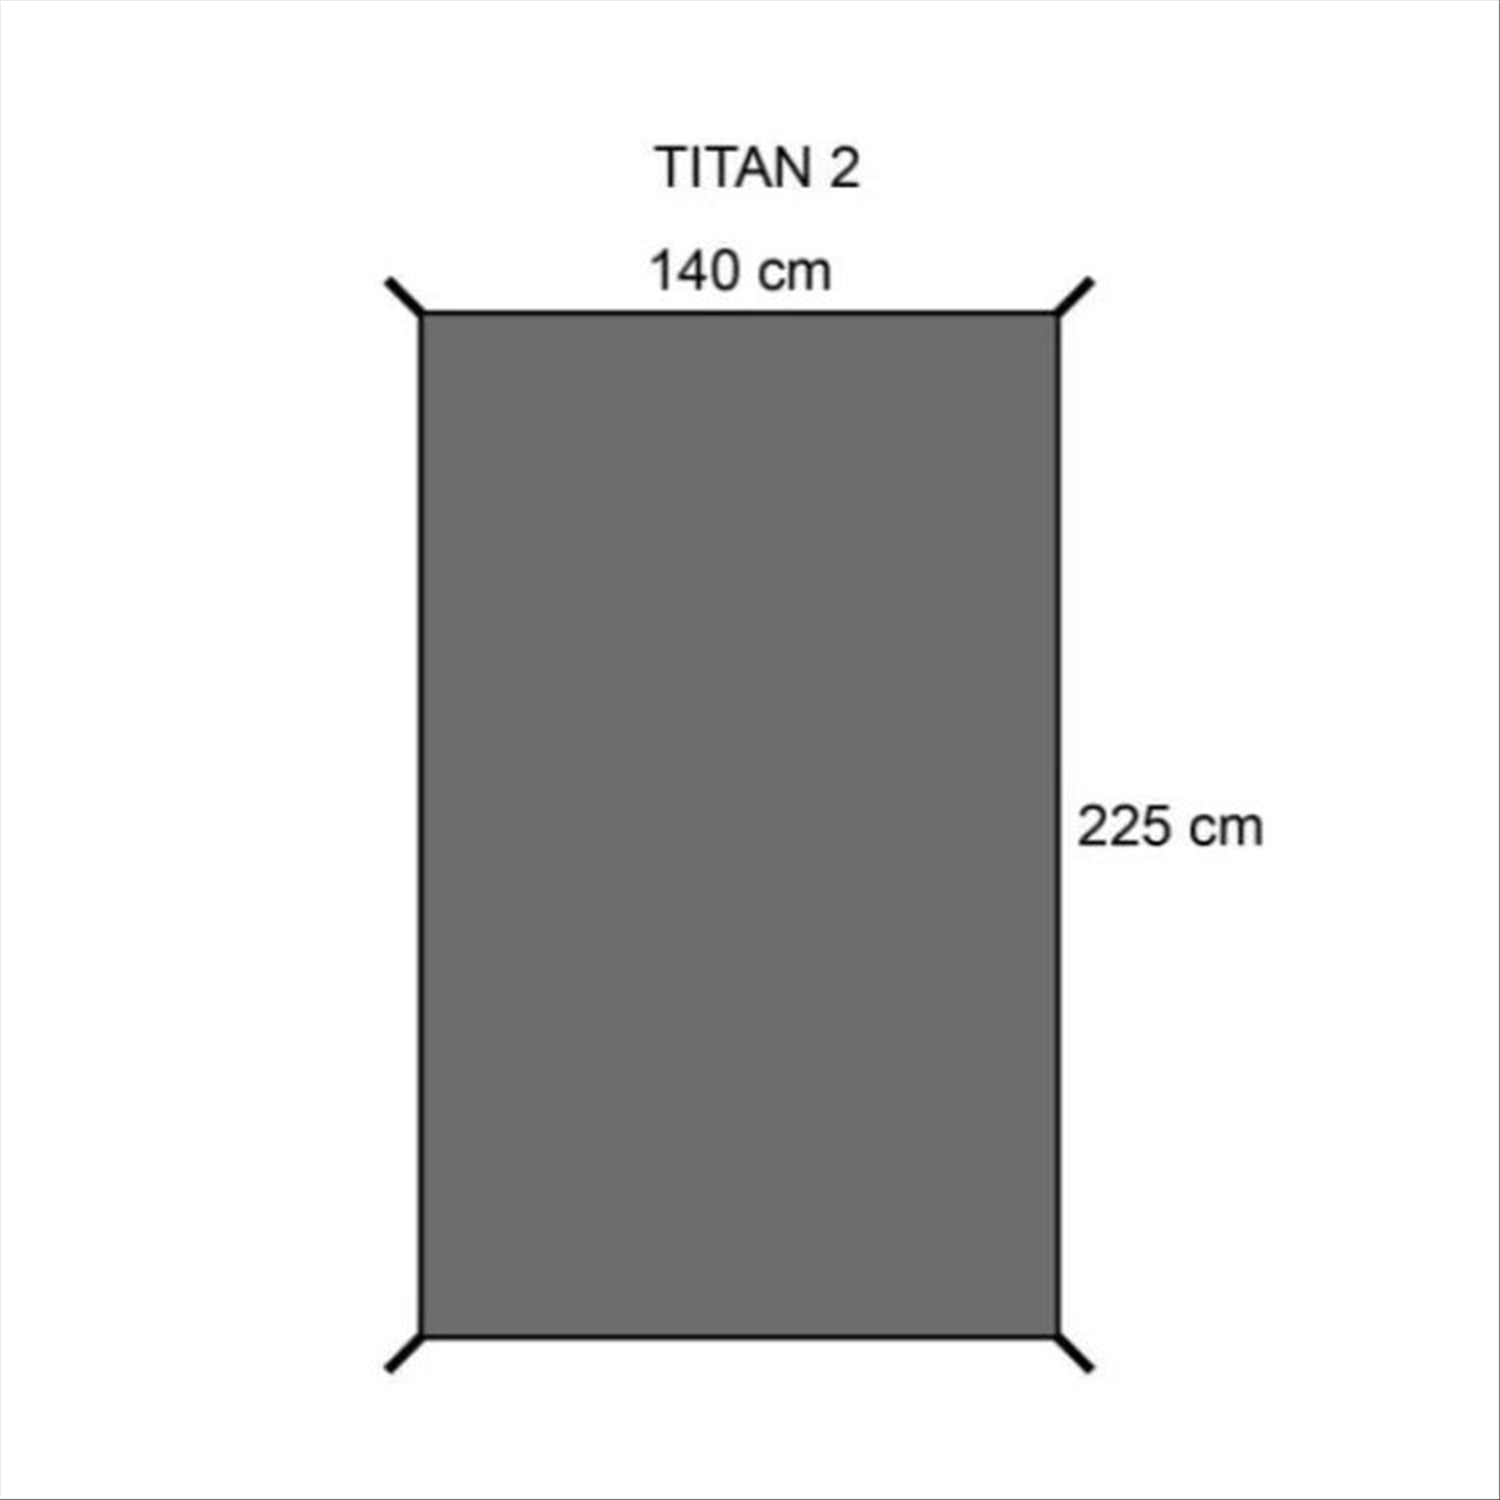 Titan 2 Tent Groundsheet - 140 x 225cm